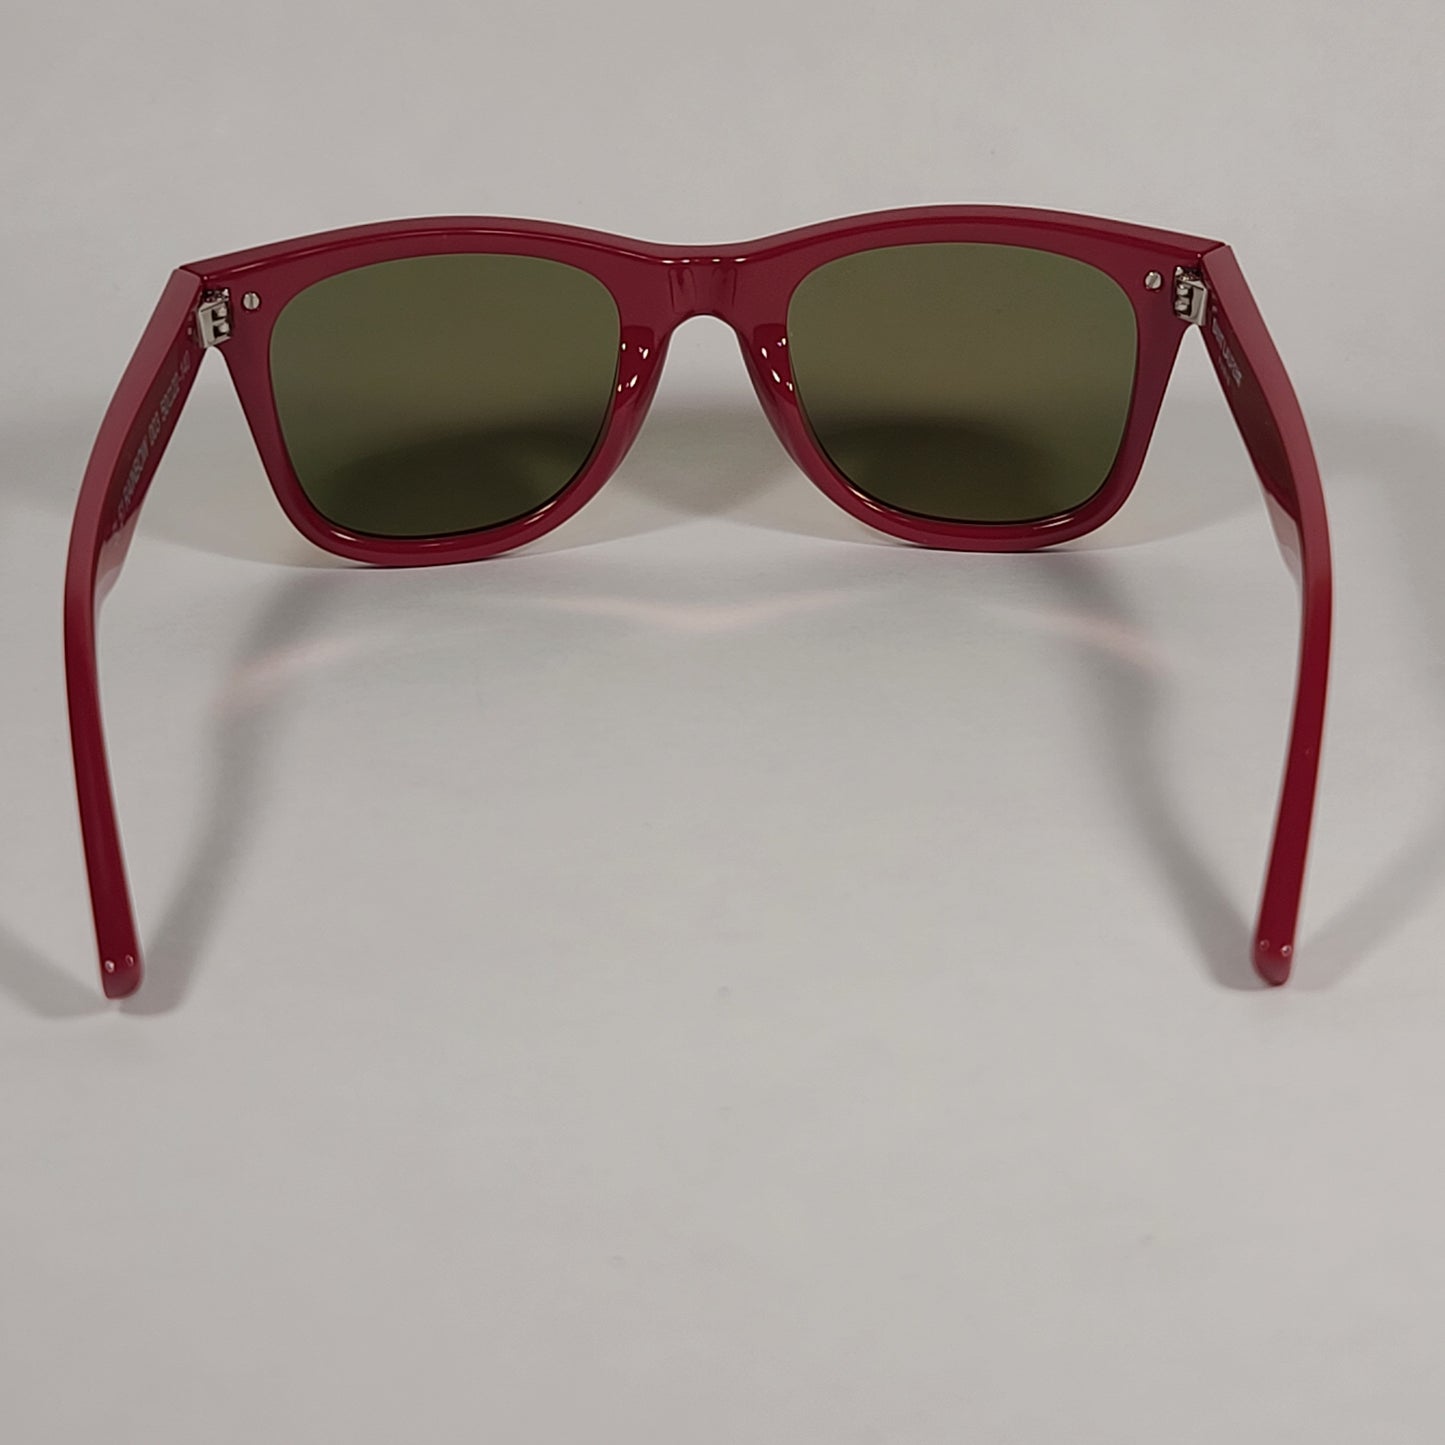 Saint Laurent Square Sunglasses Red Frame Orange Mirror Flash Lens SL51 RAINBOW 003 - Sunglasses